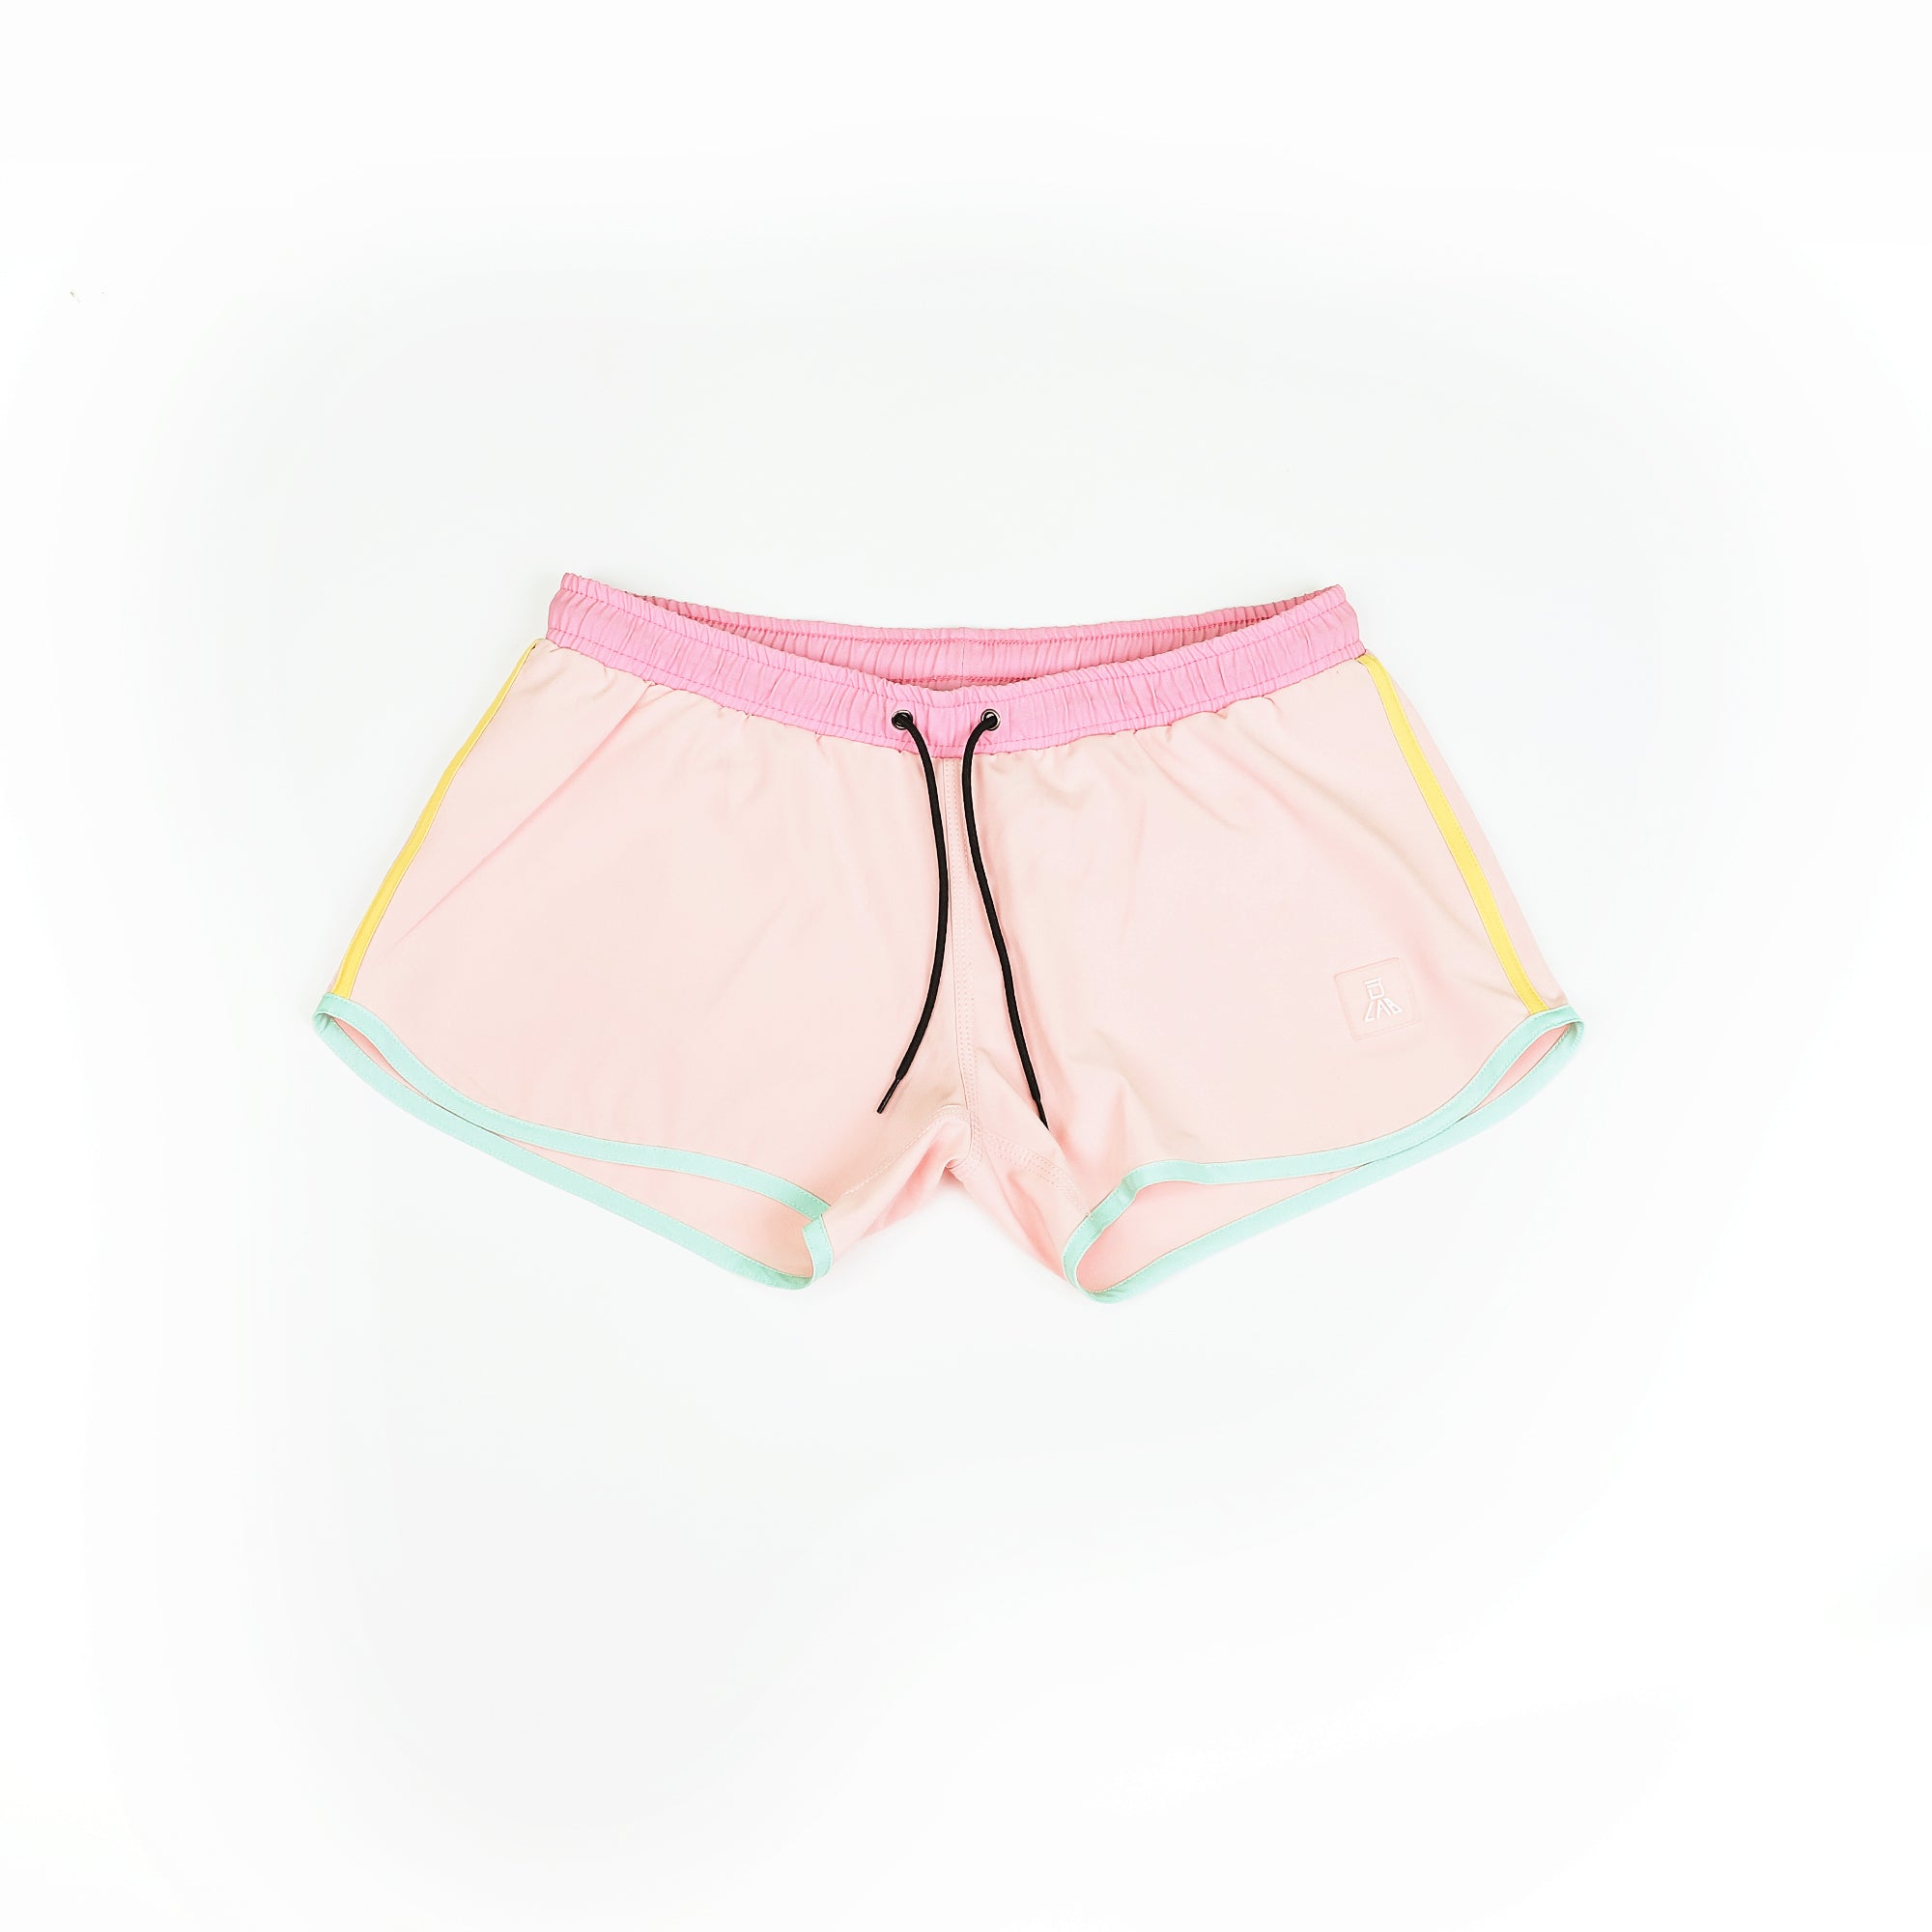 DLAB Women’s Board Shorts (Pink)